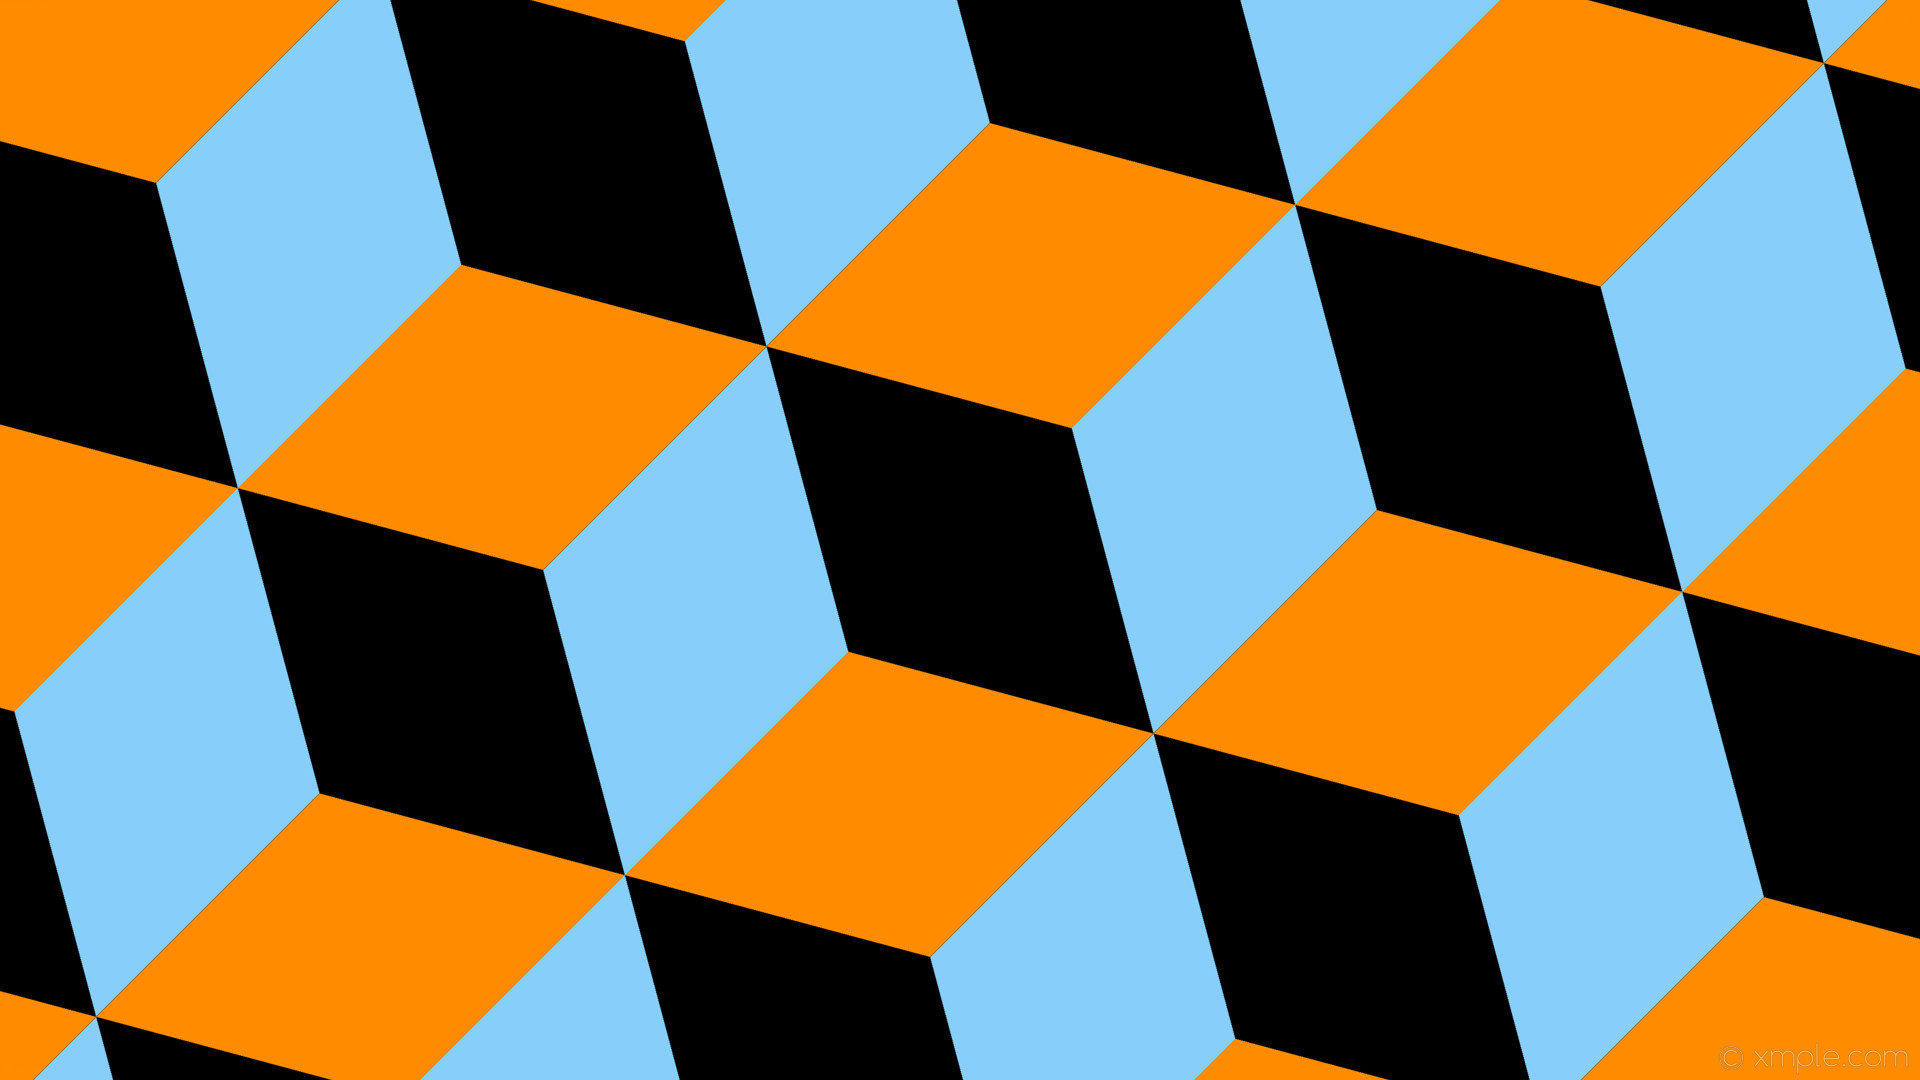 1920x1080 wallpaper blue 3d cubes orange black light sky blue dark orange #000000  #87cefa #